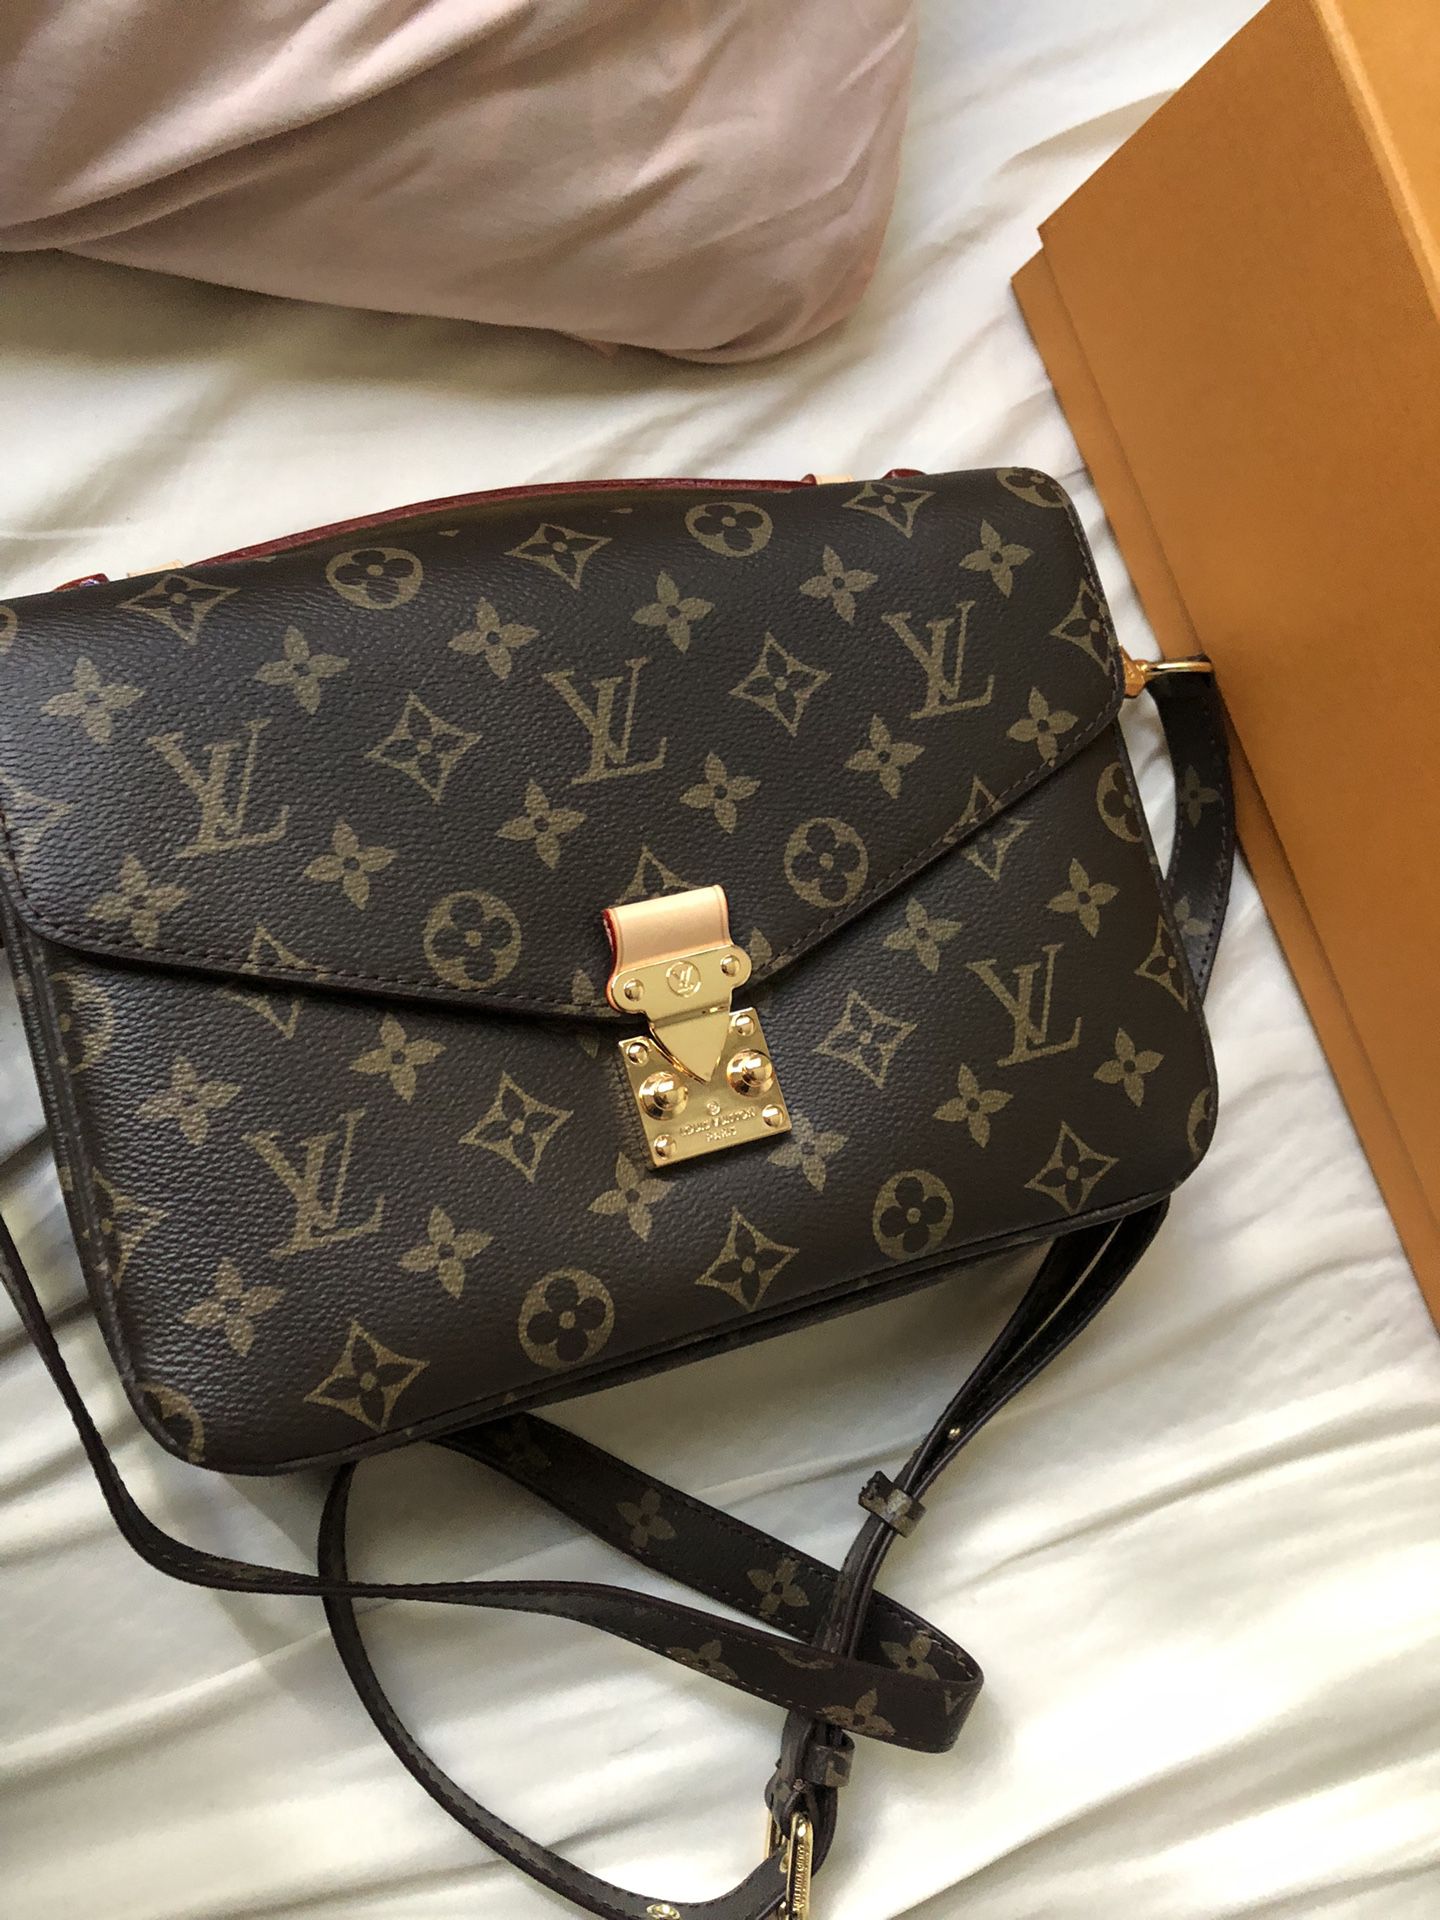 Louis Vuitton Jeune Fille Mm Monogram Crossbody Bag for Sale in Sunnyvale,  CA - OfferUp